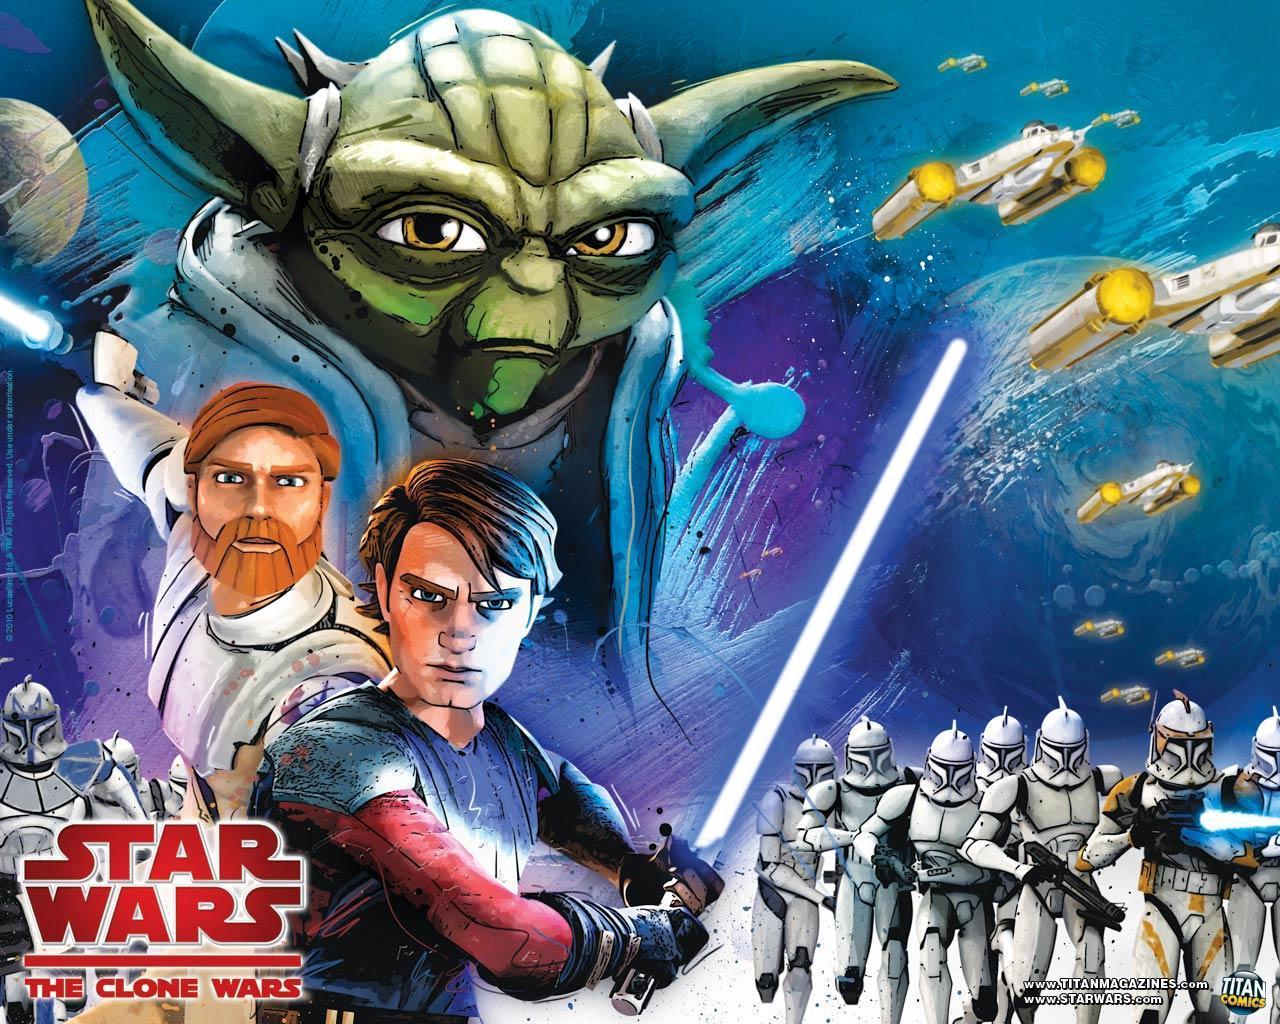 Star Wars: The Clone Wars Magazine desktop wallpaper. News